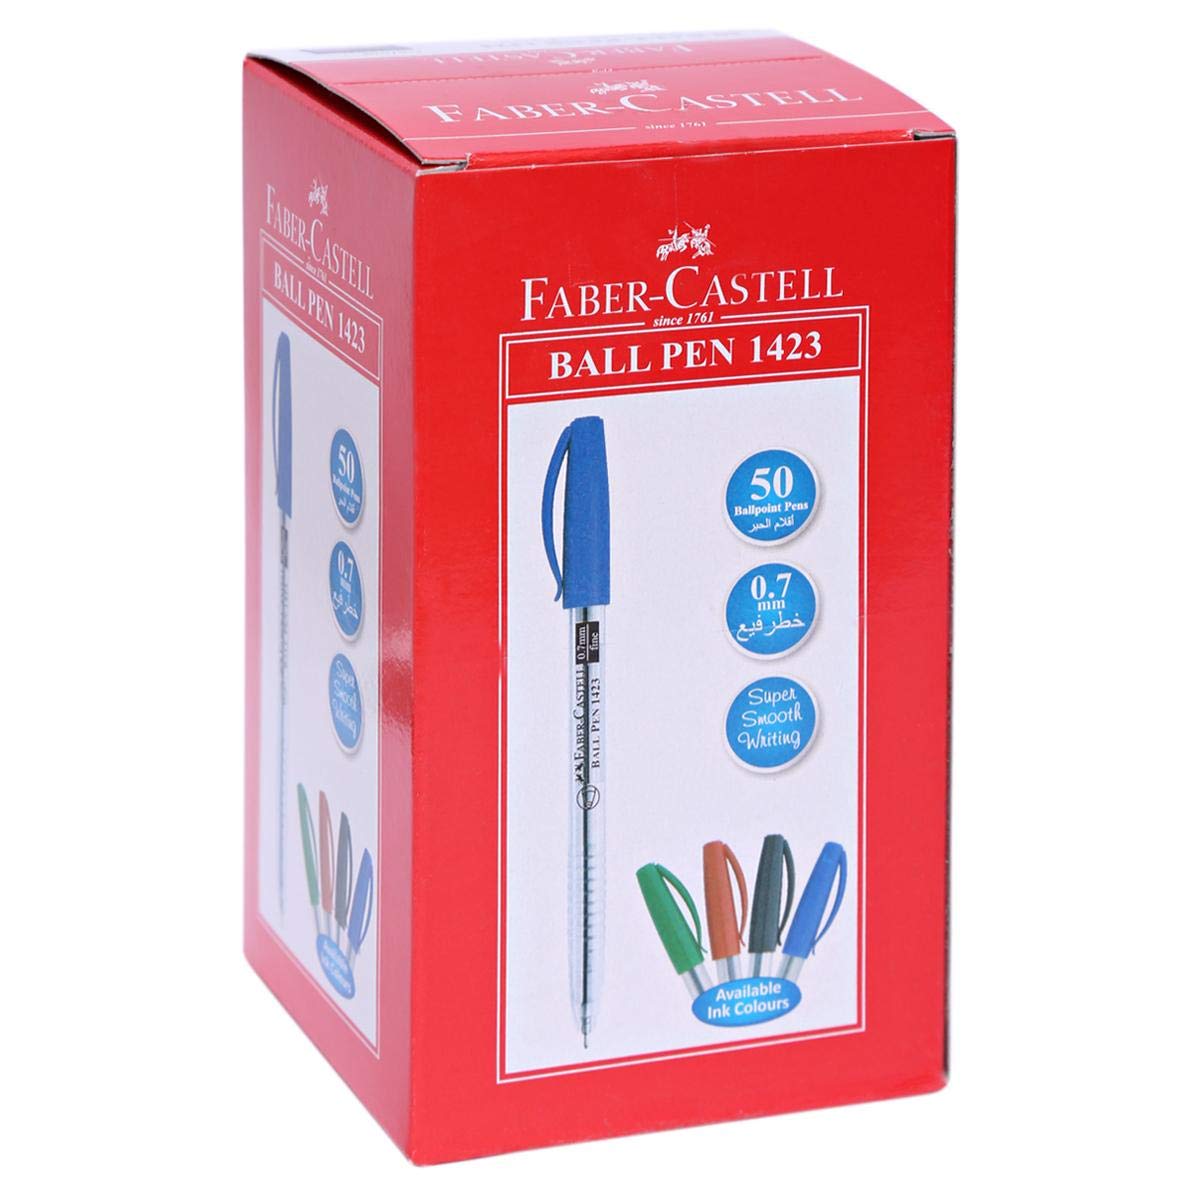 Faber-Castell 1423 0.7mm Ball Pen (Set of 50, Black)